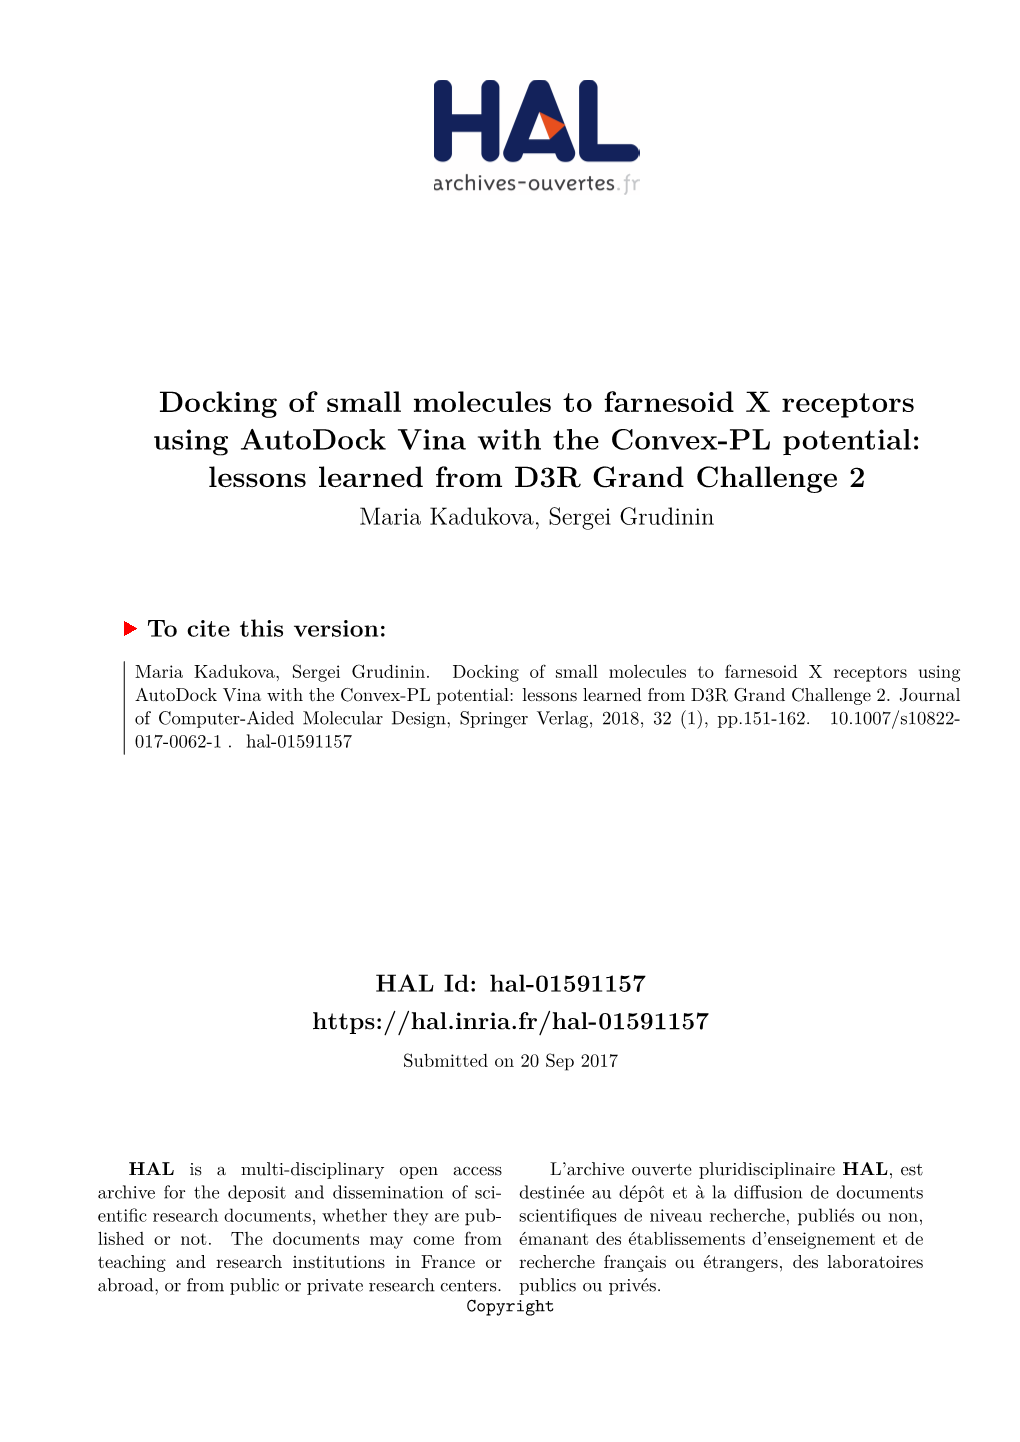 Docking of Small Molecules to Farnesoid X Receptors Using